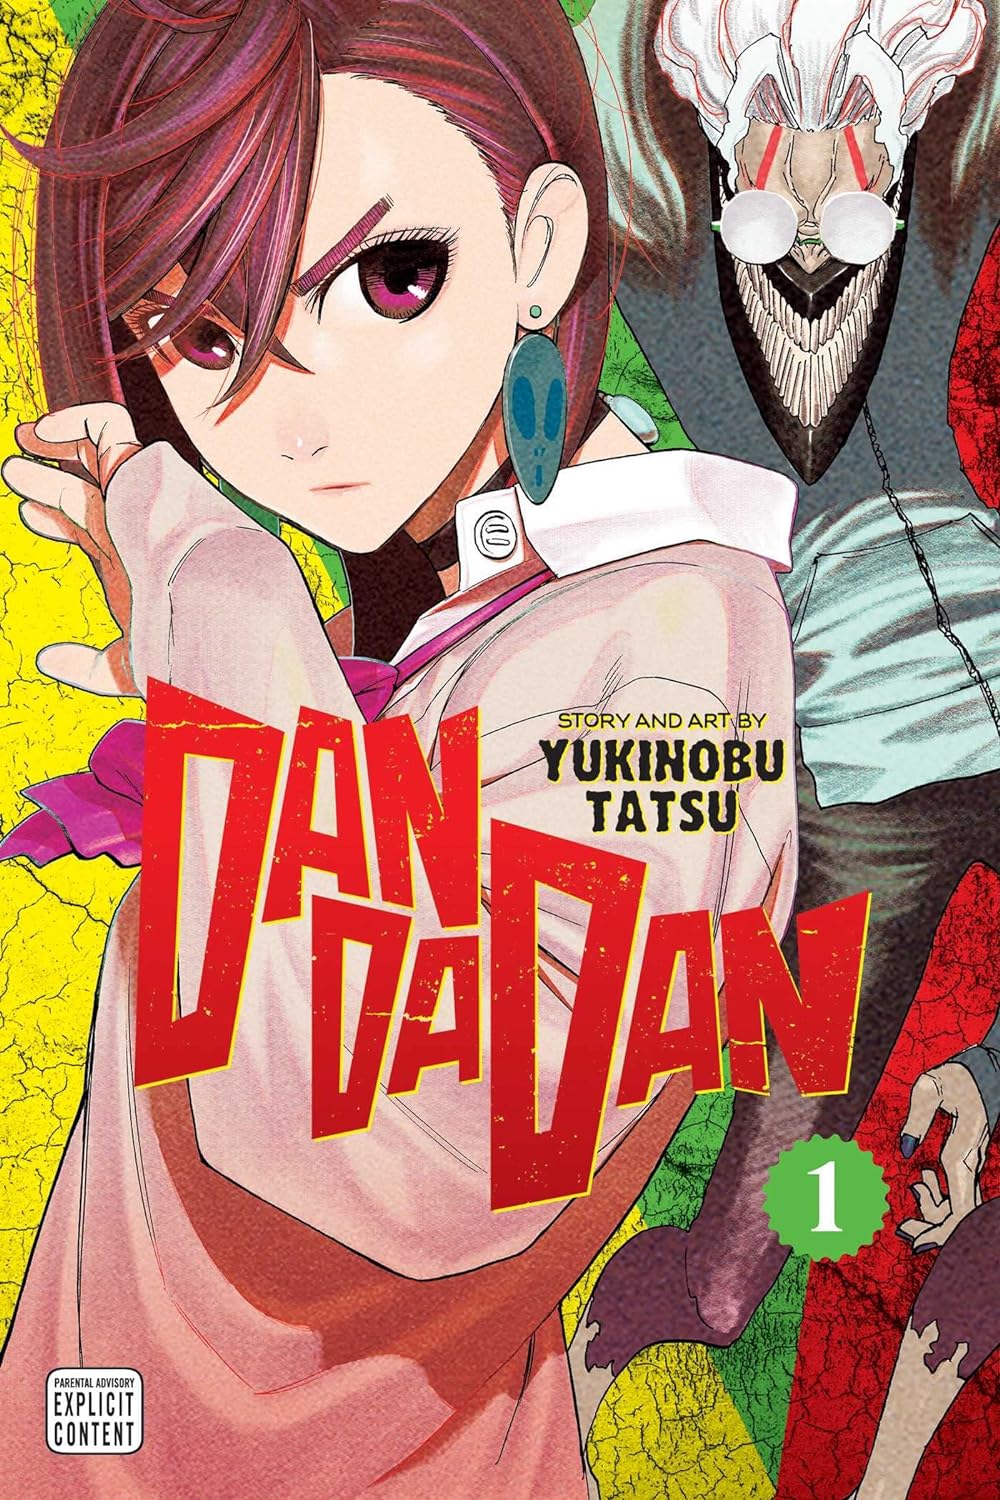 Dandadan Manga Volume 1 (2023 Printing)